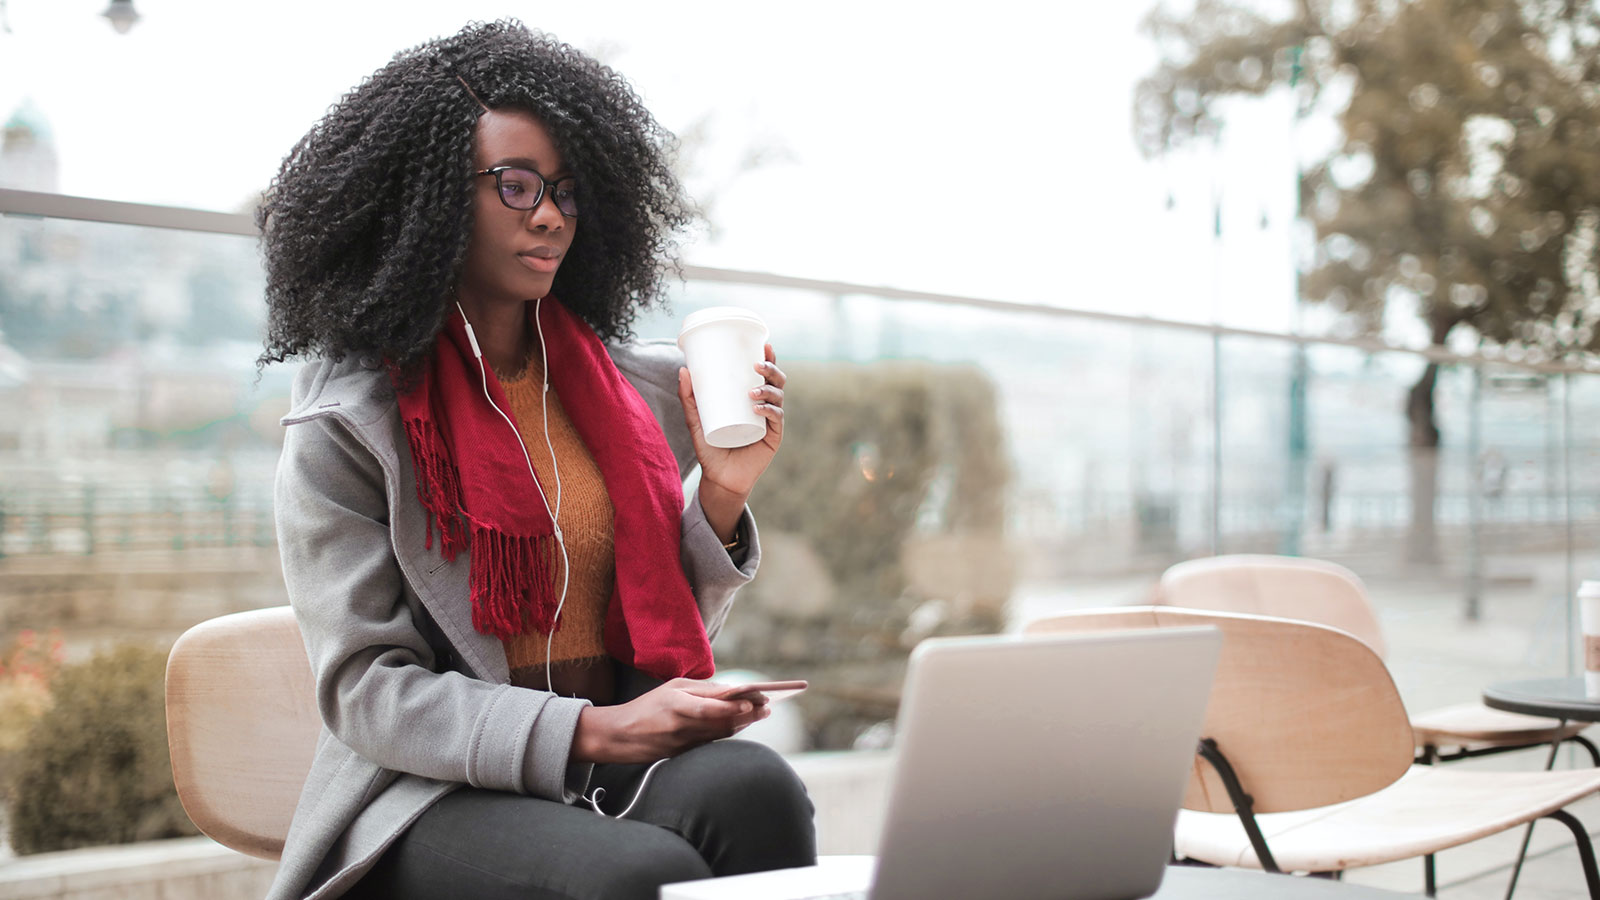 Google’s pledge to train 100k Black women in digital skills by 2022